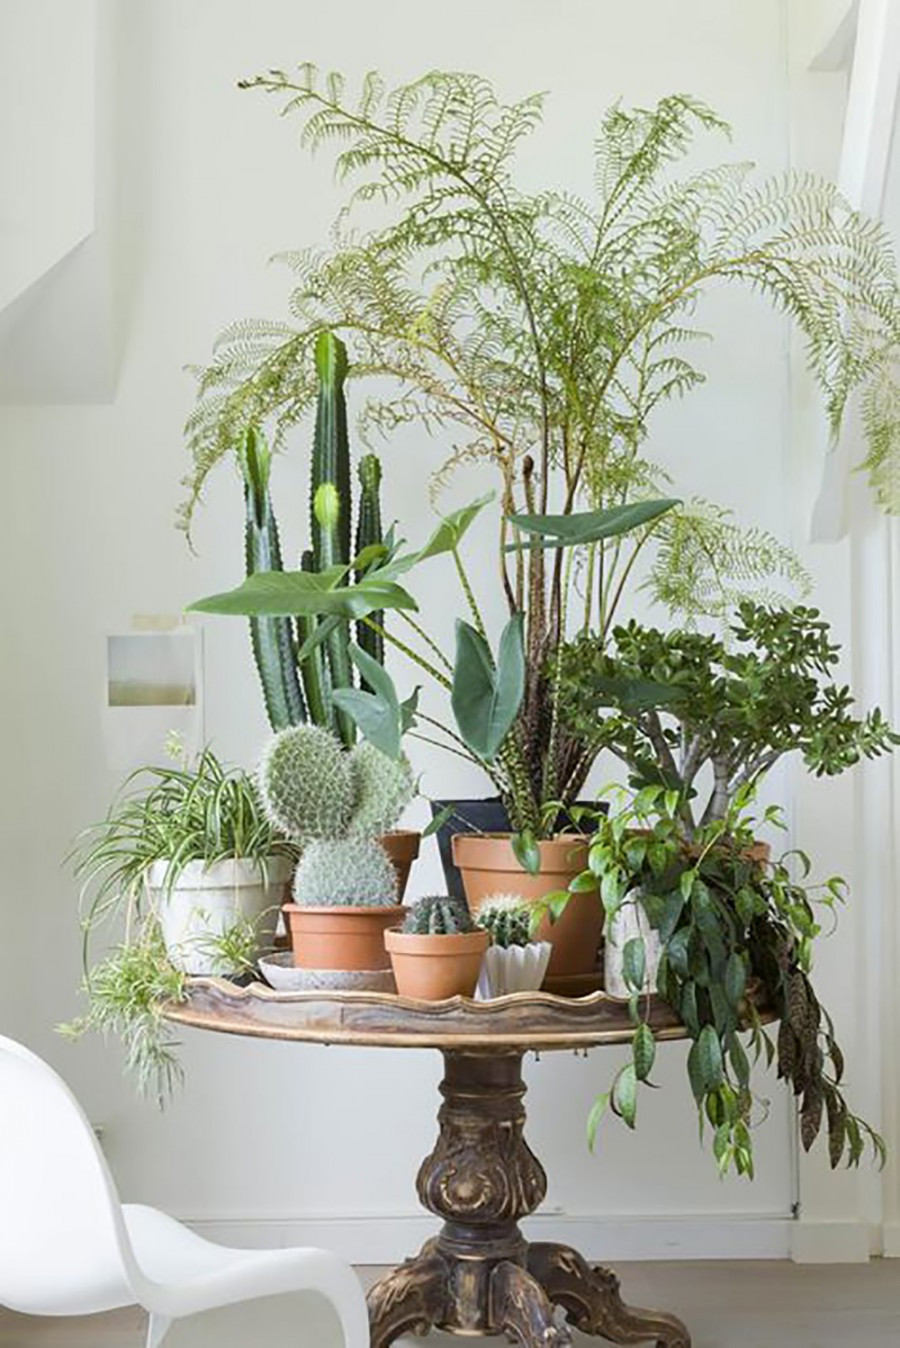 Living Room Plants Decor
 10 HAPPY LIVING ROOM IDEAS WITH PLANTS